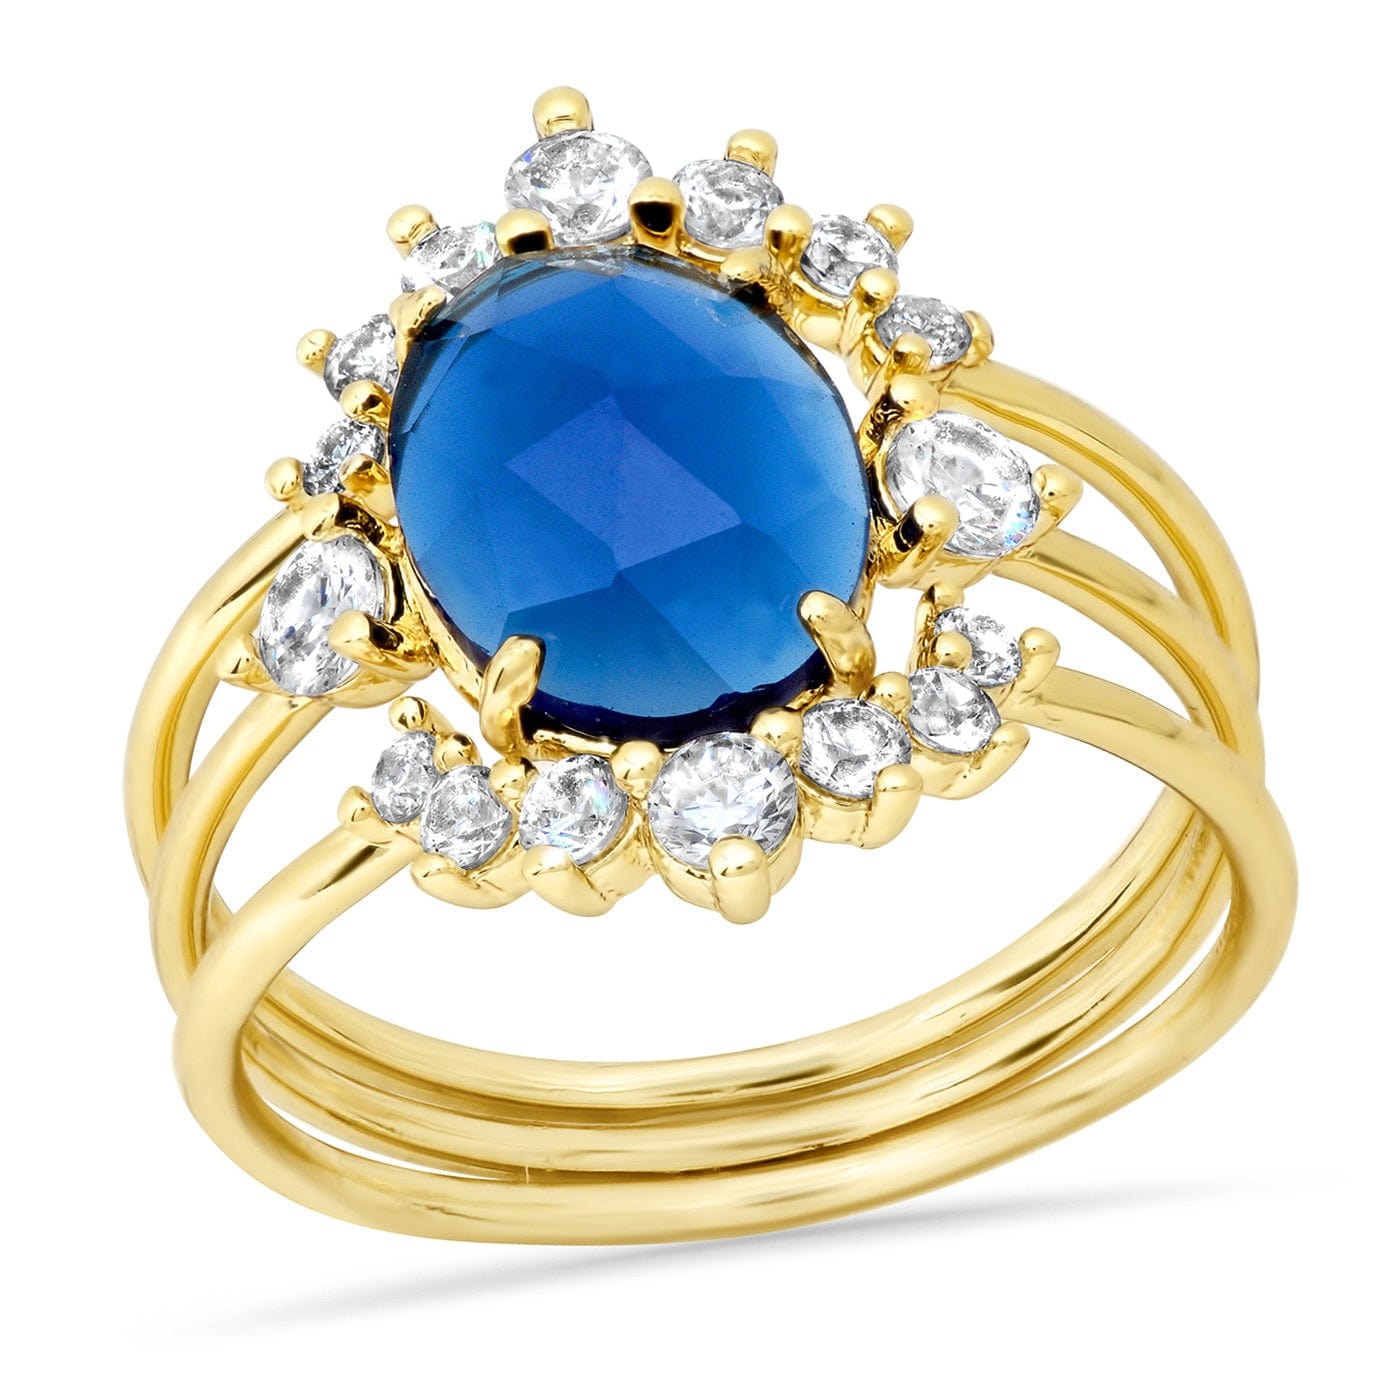 TAI JEWELRY Rings September / 6 Three Piece Vintage Inspired Birthstone Ring